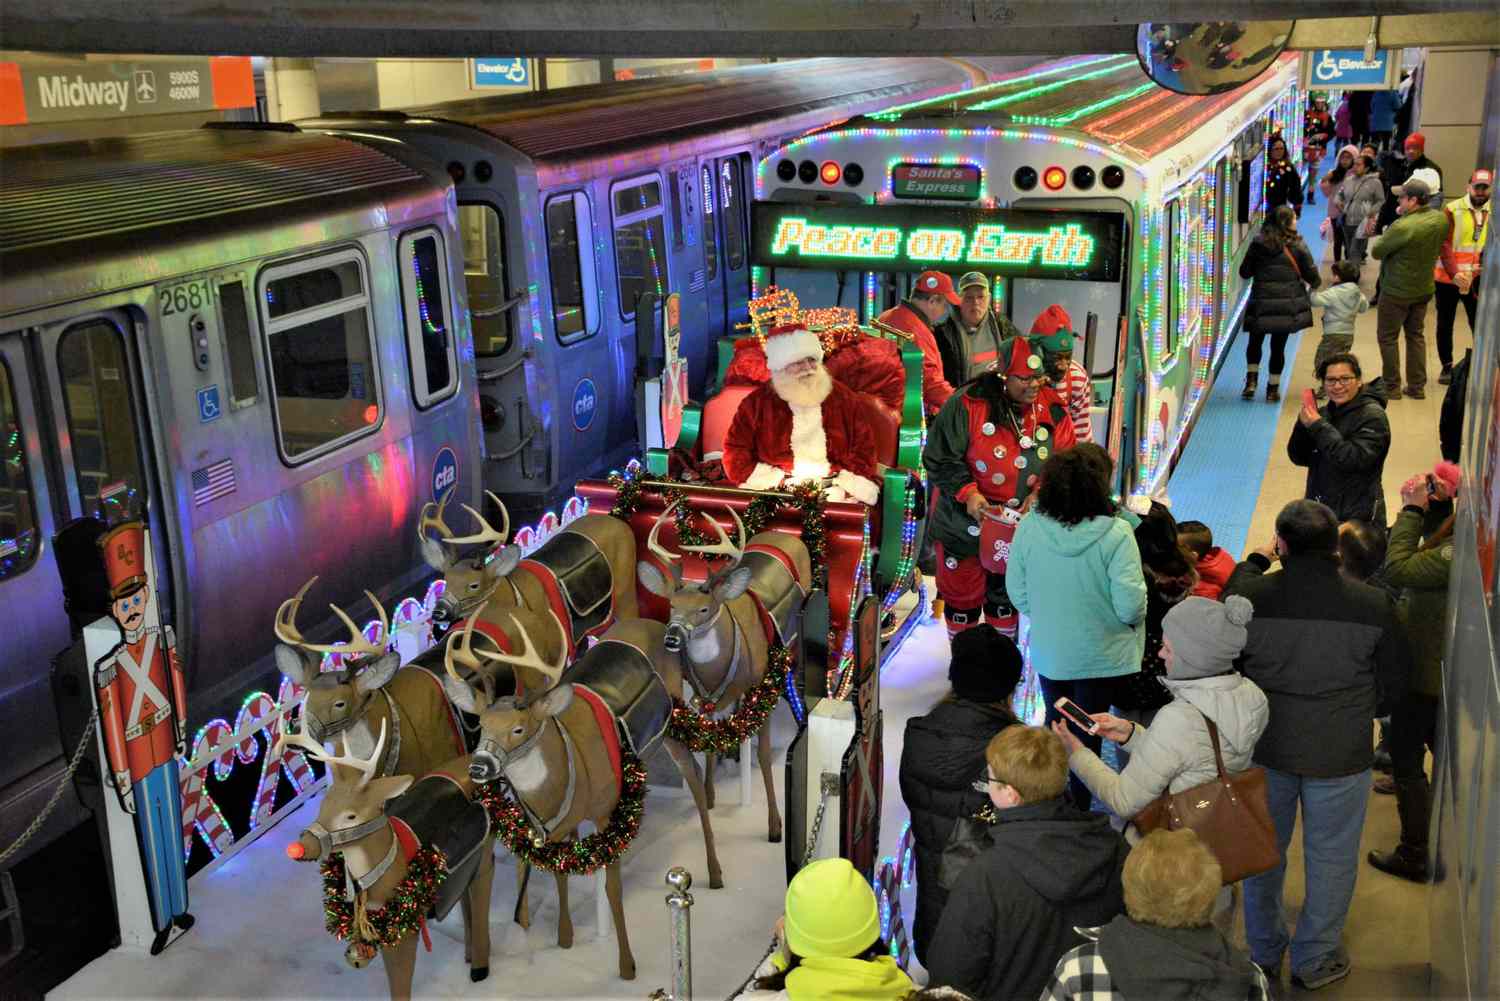 CTA Holiday Train, Chicago